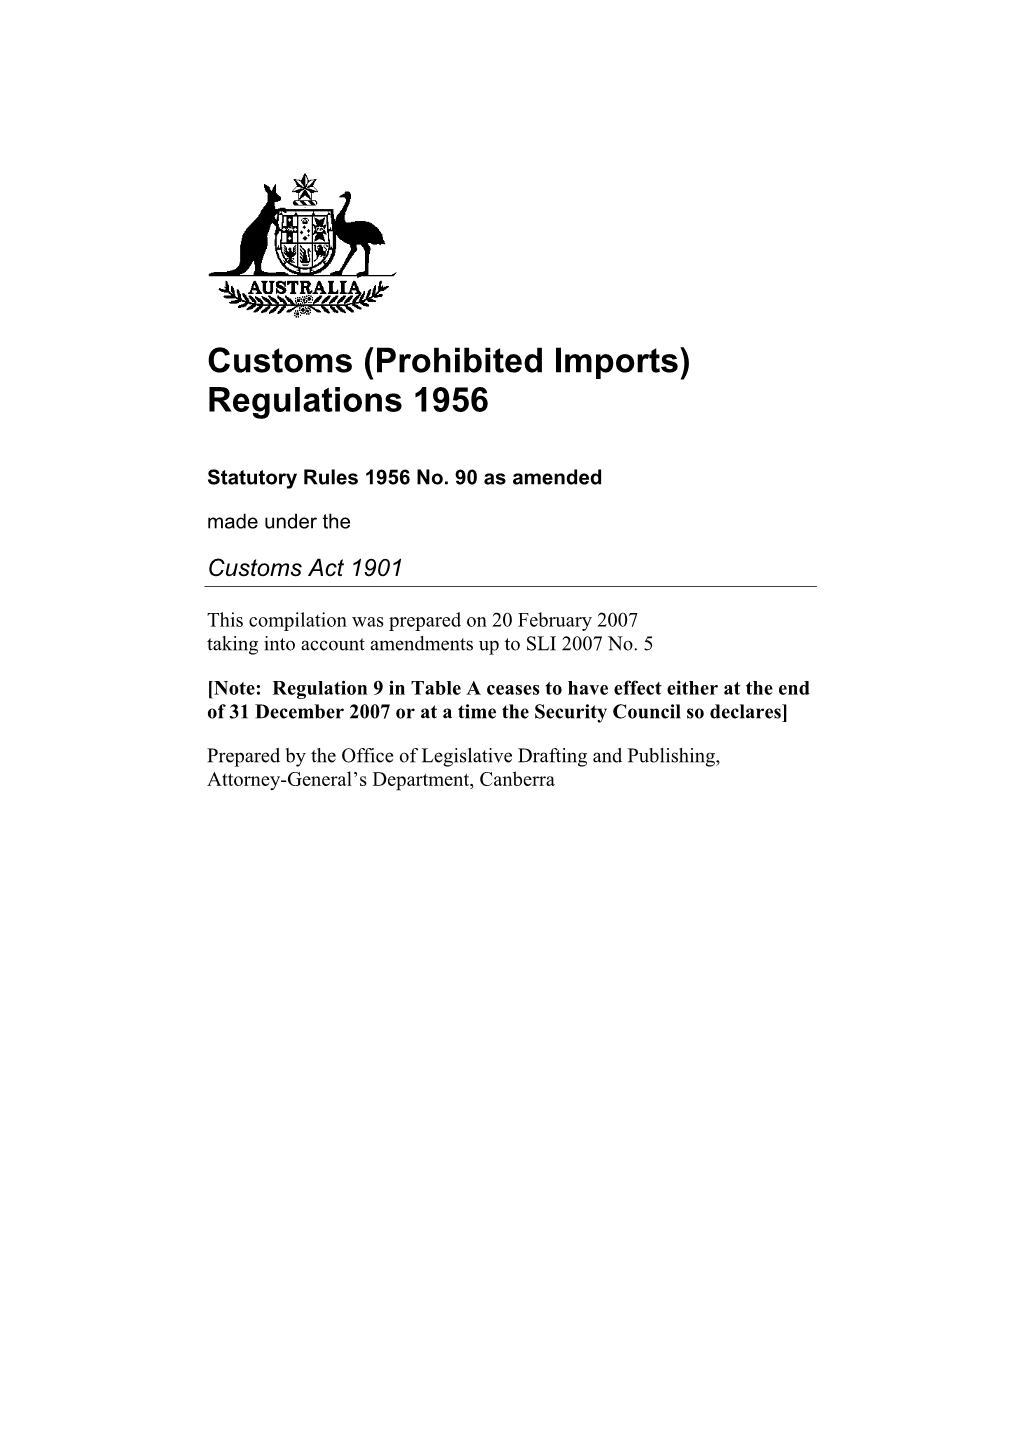 Customs (Prohibited Imports) Regulations 1956